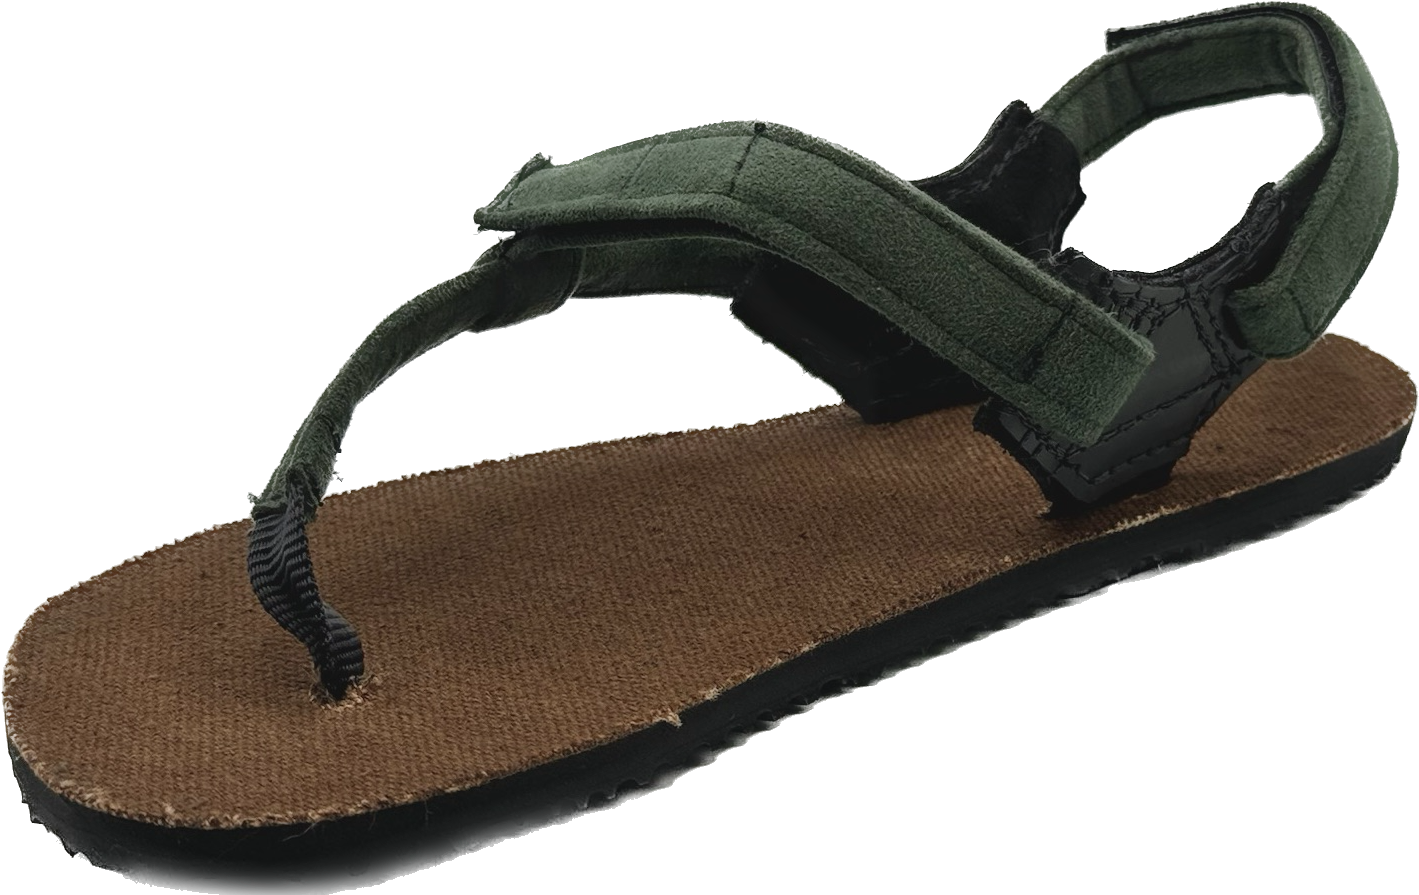 BlackBear Sandals 2.0 - Brown Hemp Footbed - Green Straps